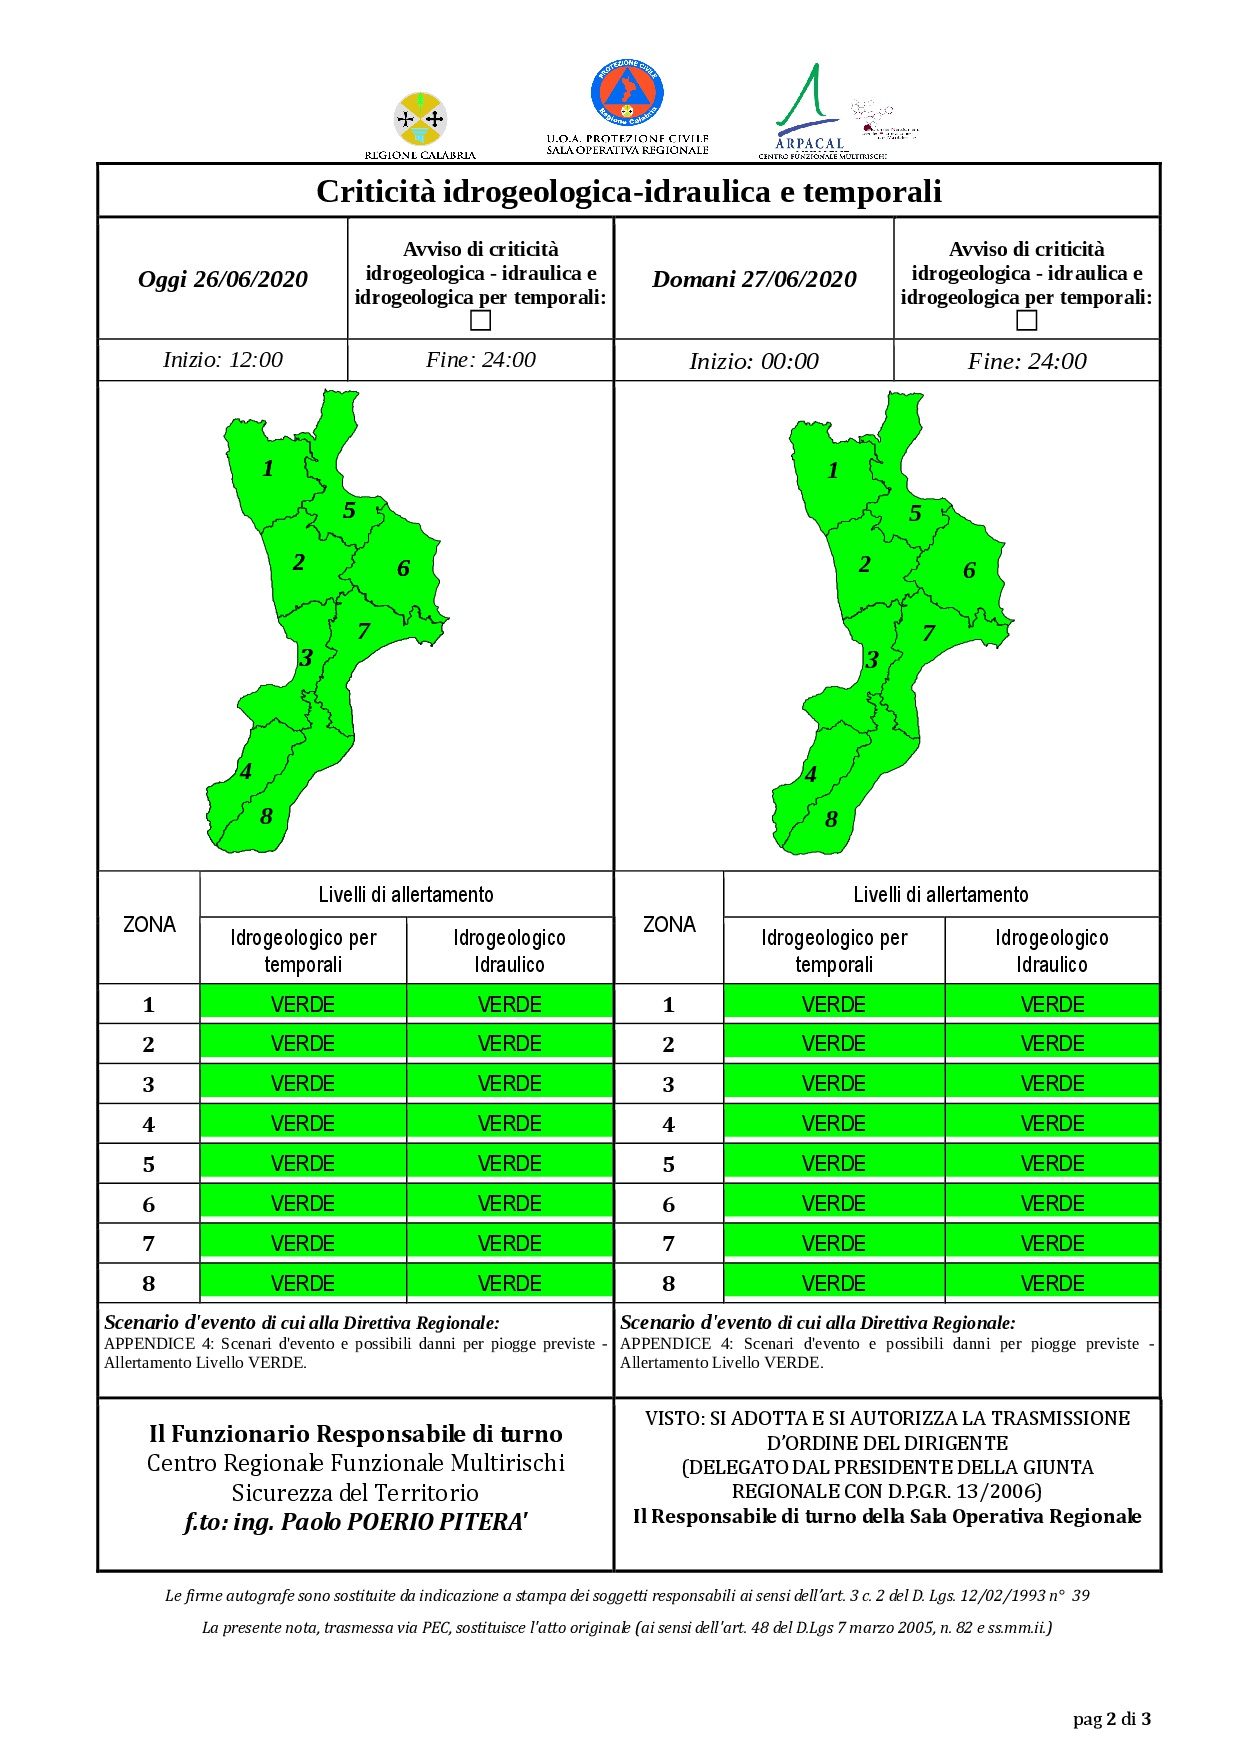 Criticità idrogeologica-idraulica e temporali in Calabria 26-06-2020